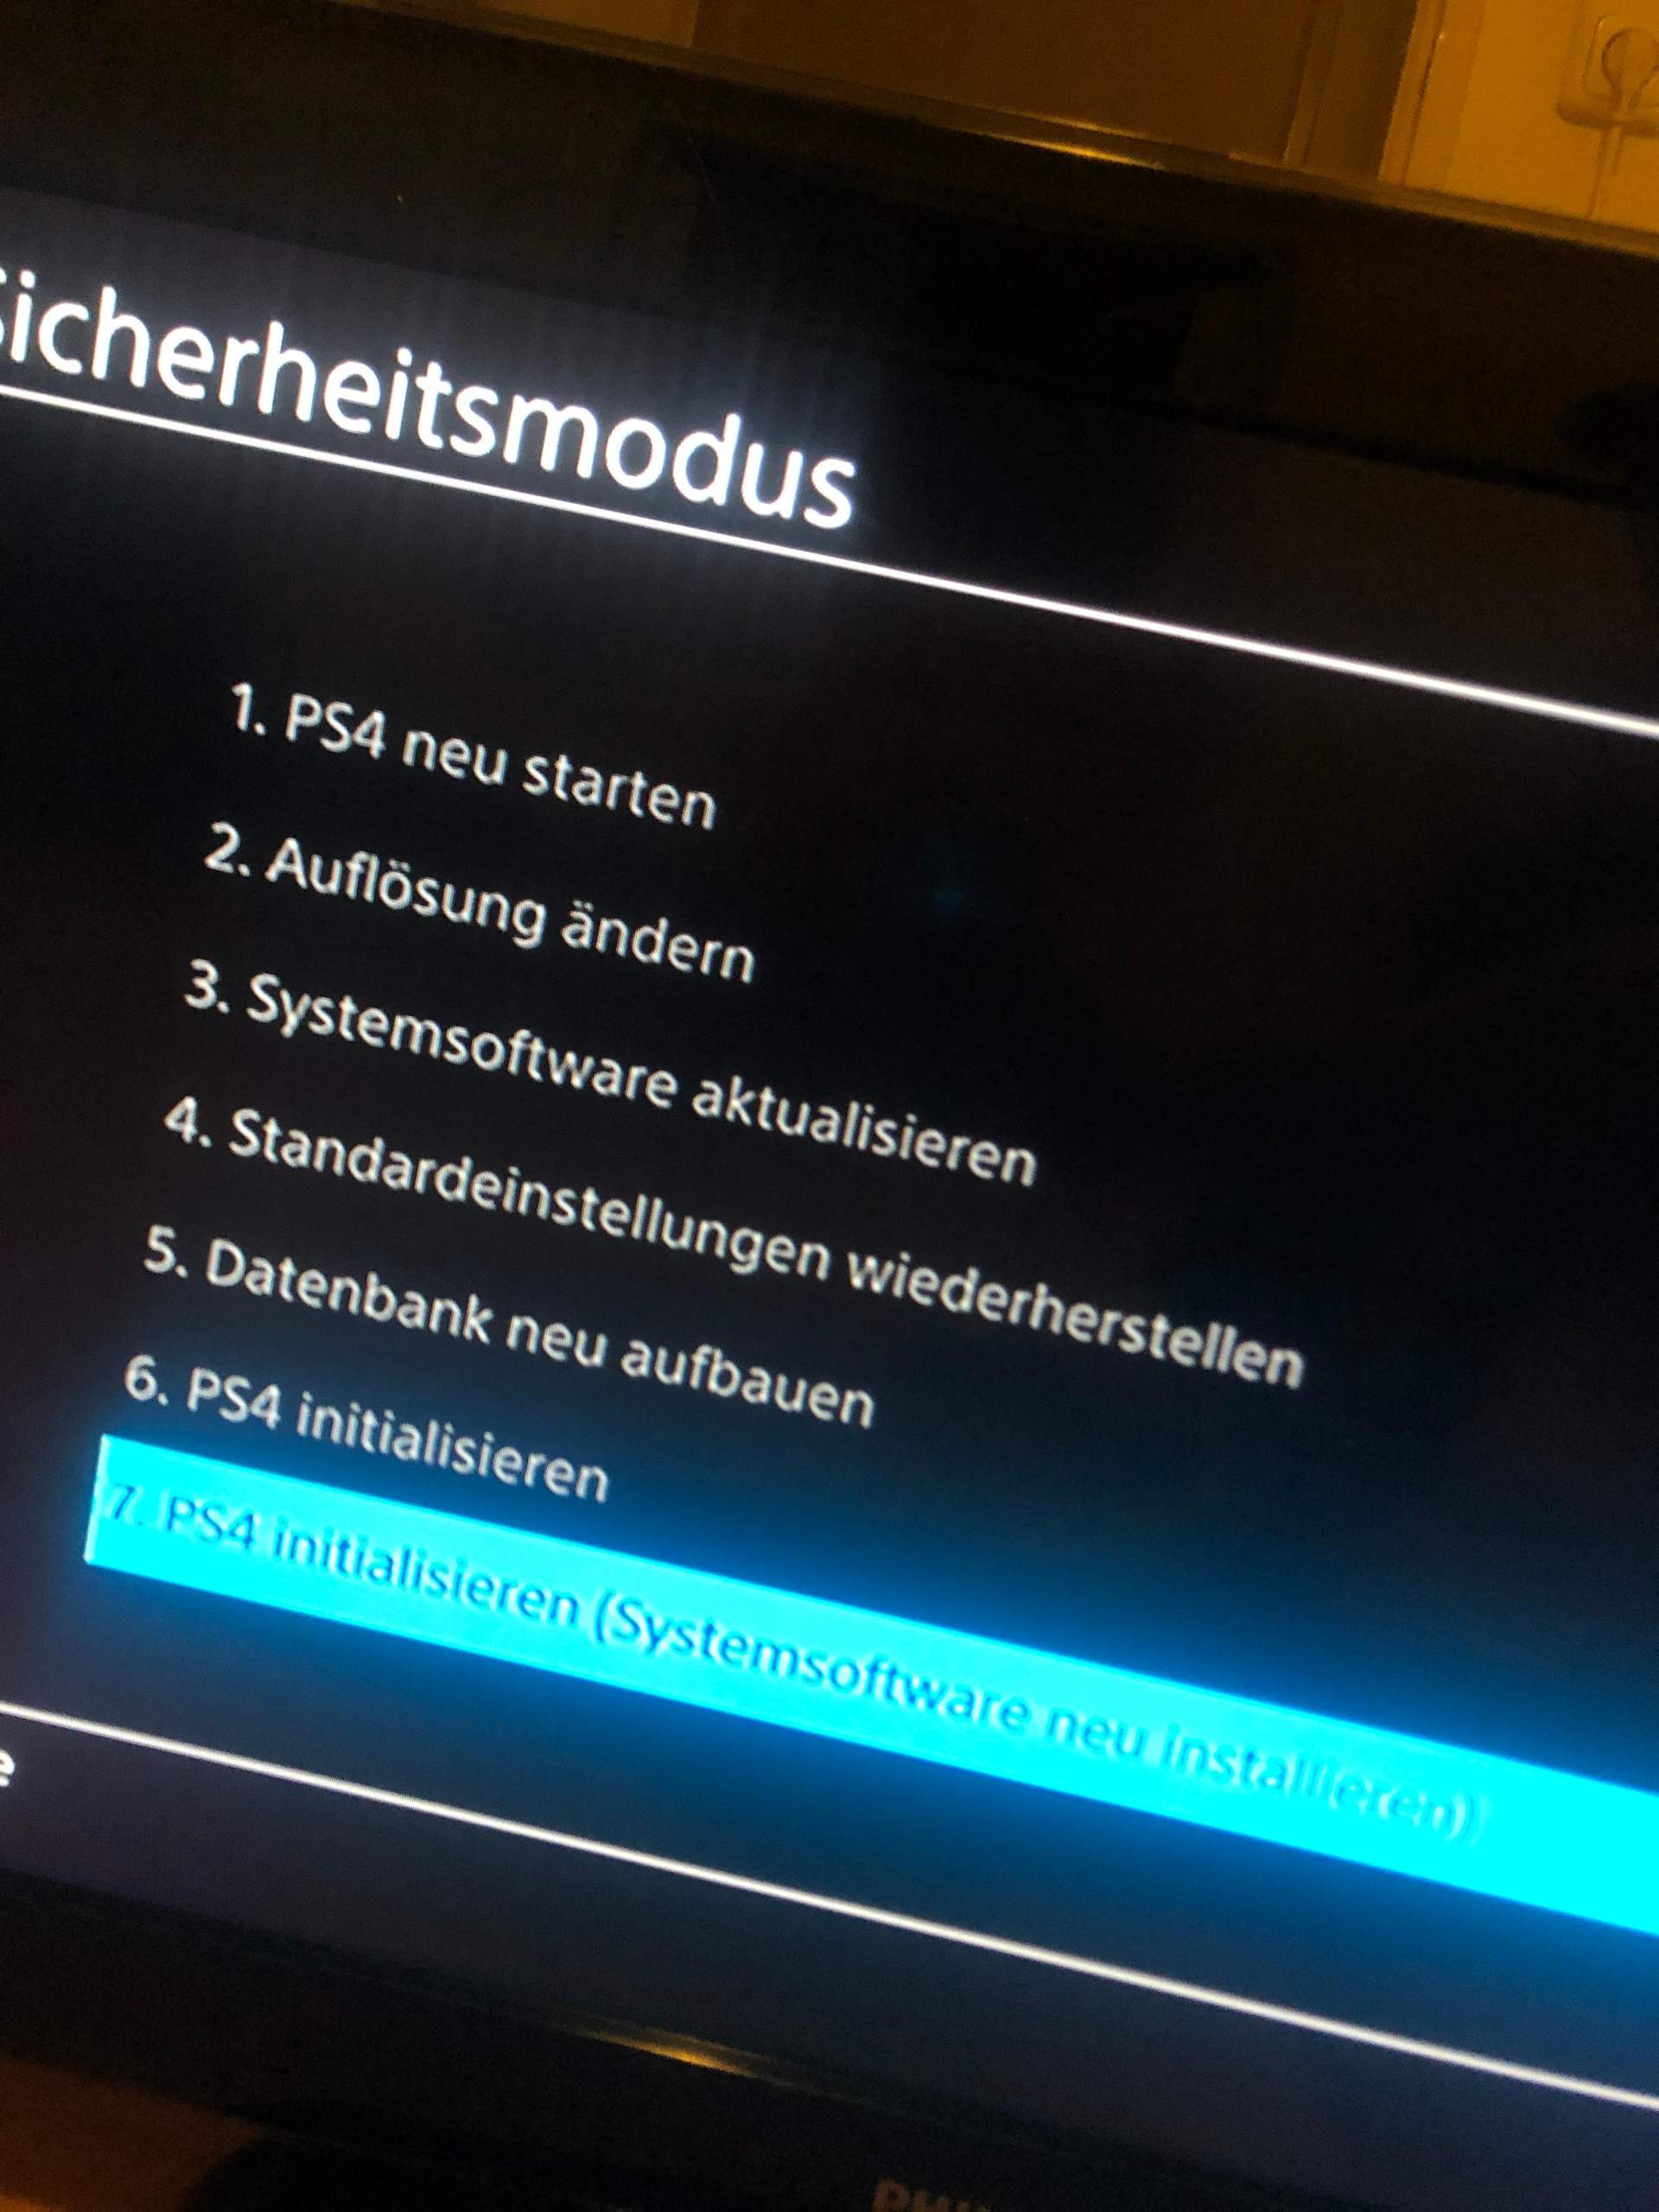 Ps4 kann nur 7.ps4 initialisieren (Computer, PlayStation 4)